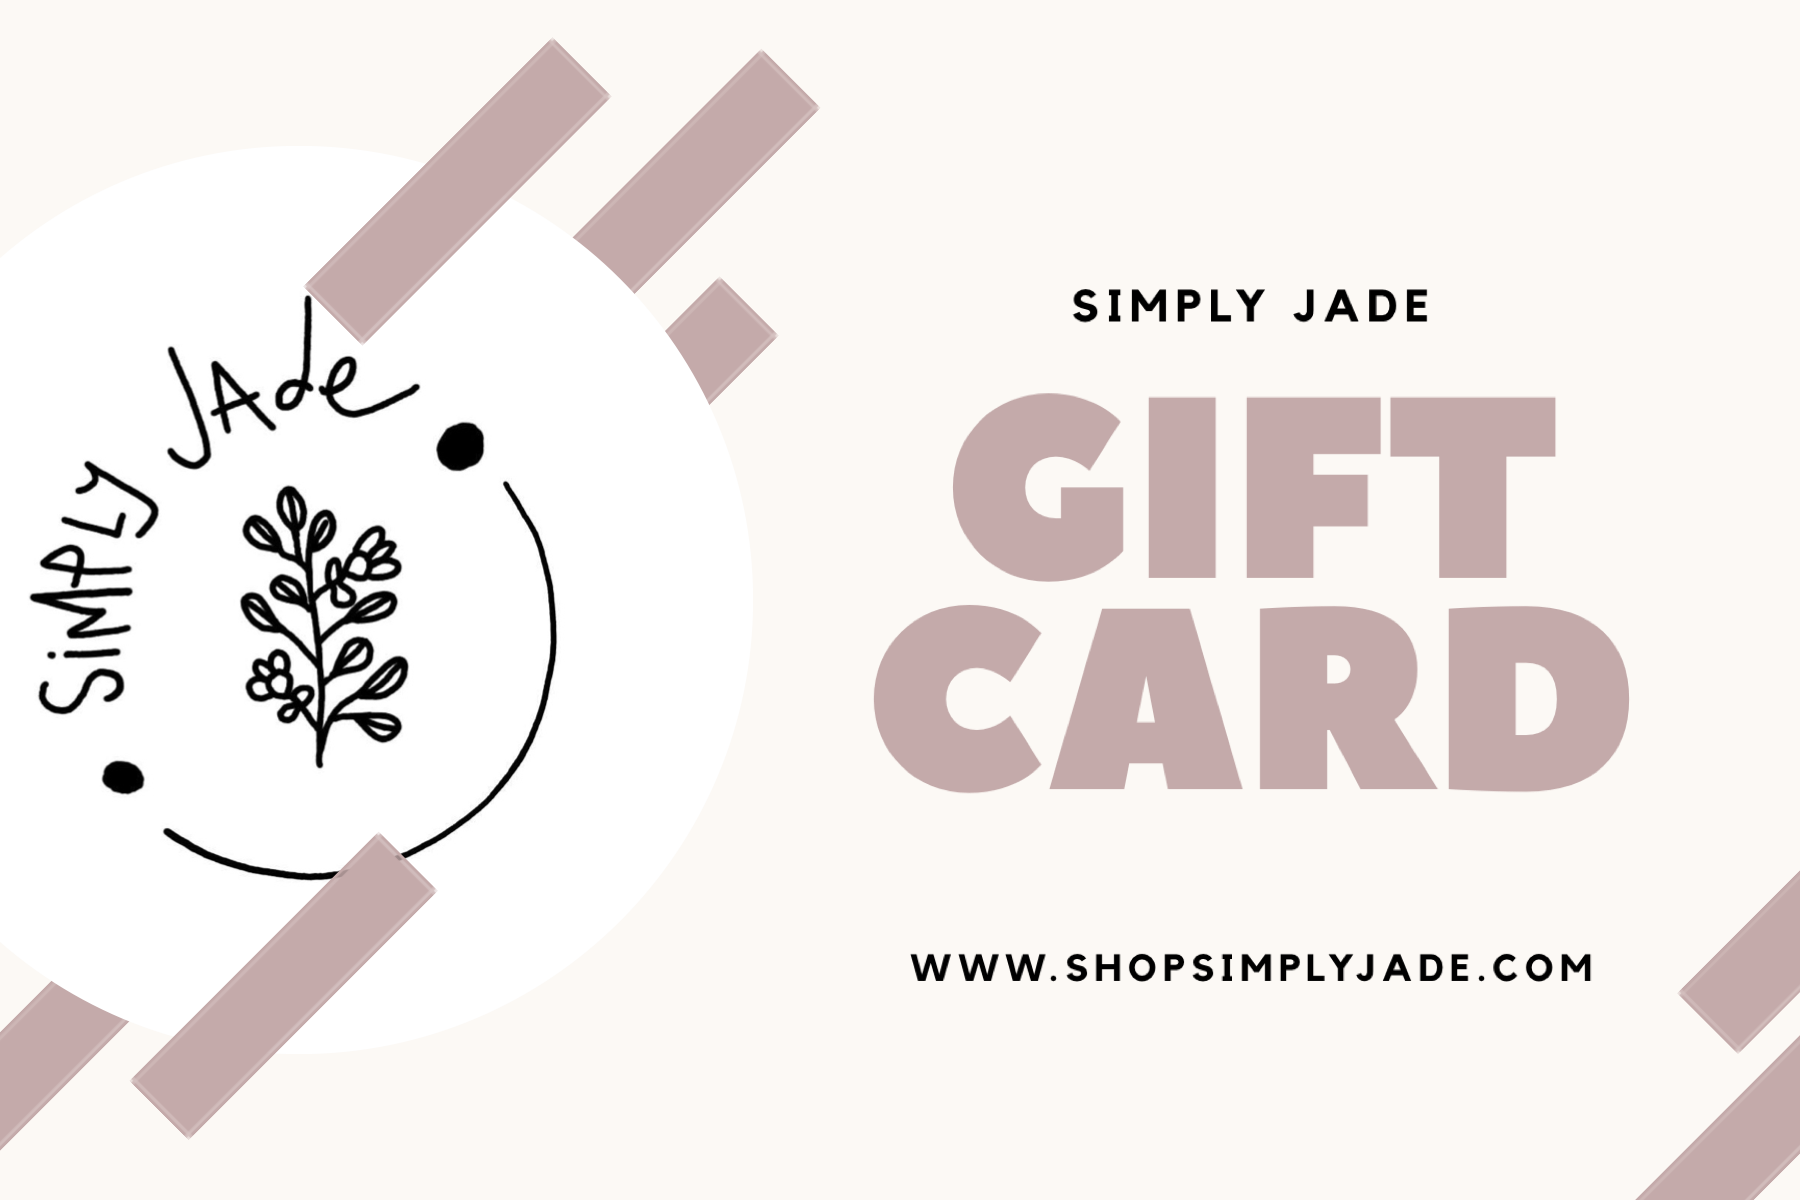 Simply Jade Gift Card